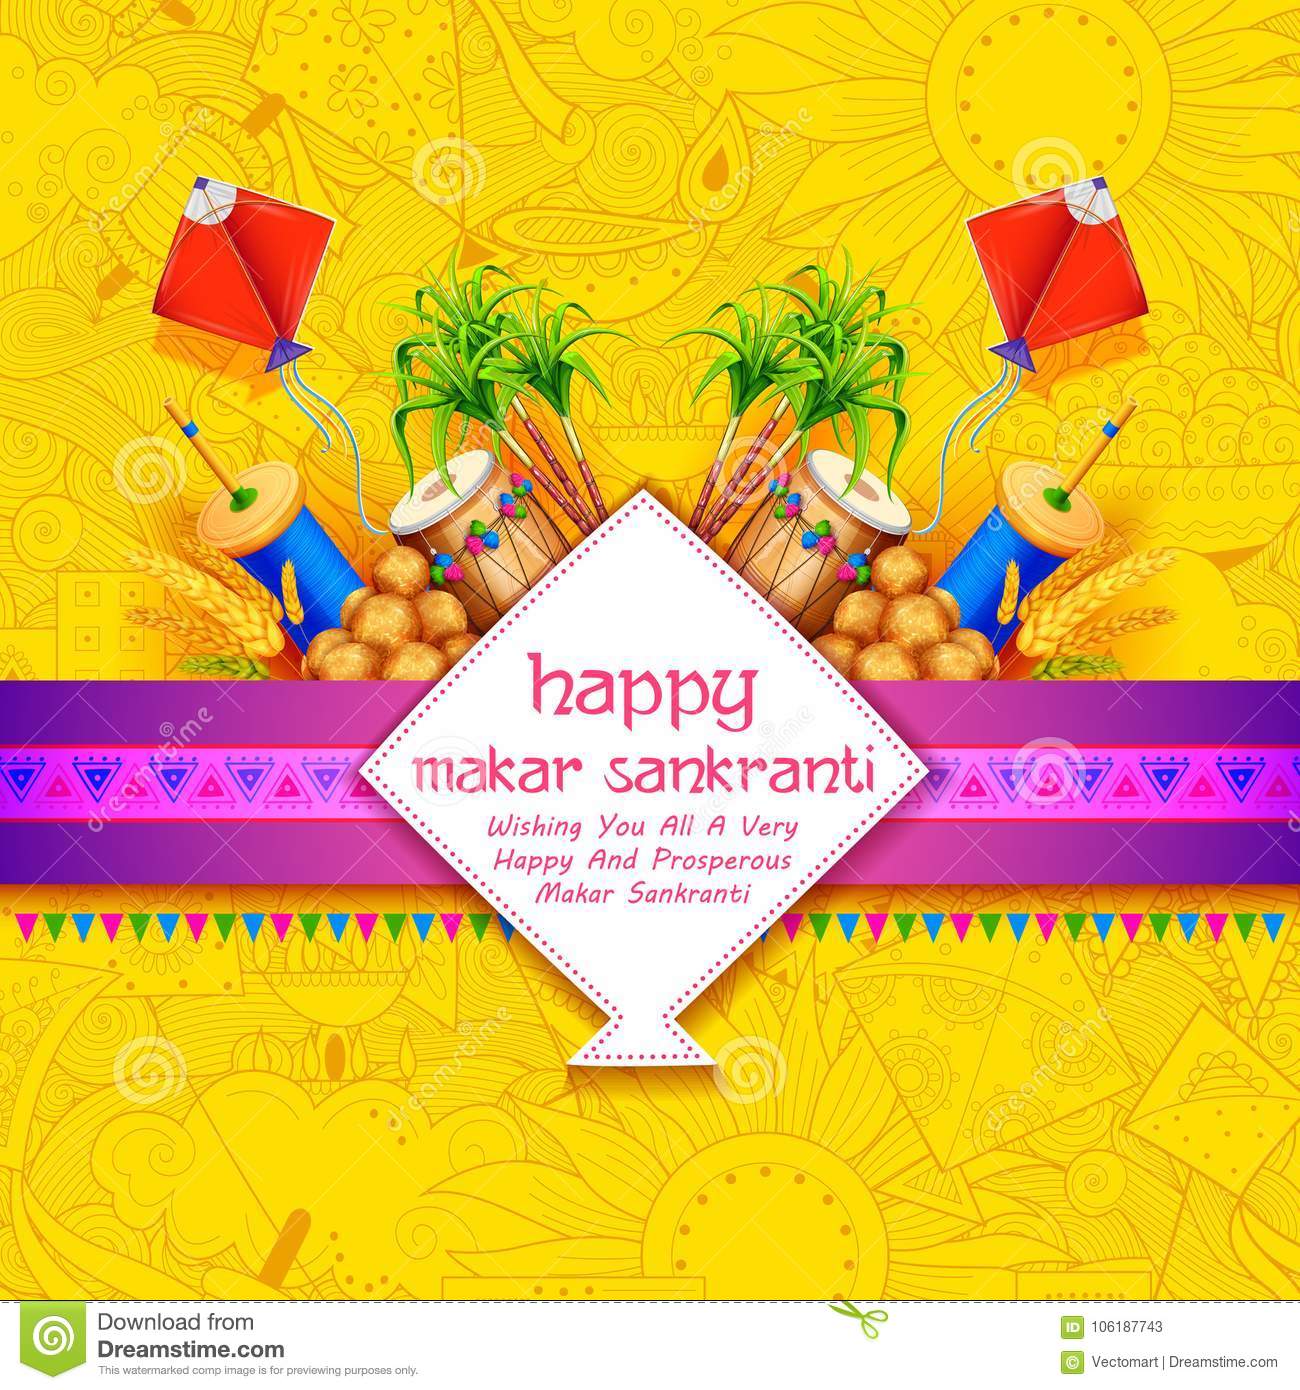 Makar sankranti wallpaper with colorful kite for festival stock vector